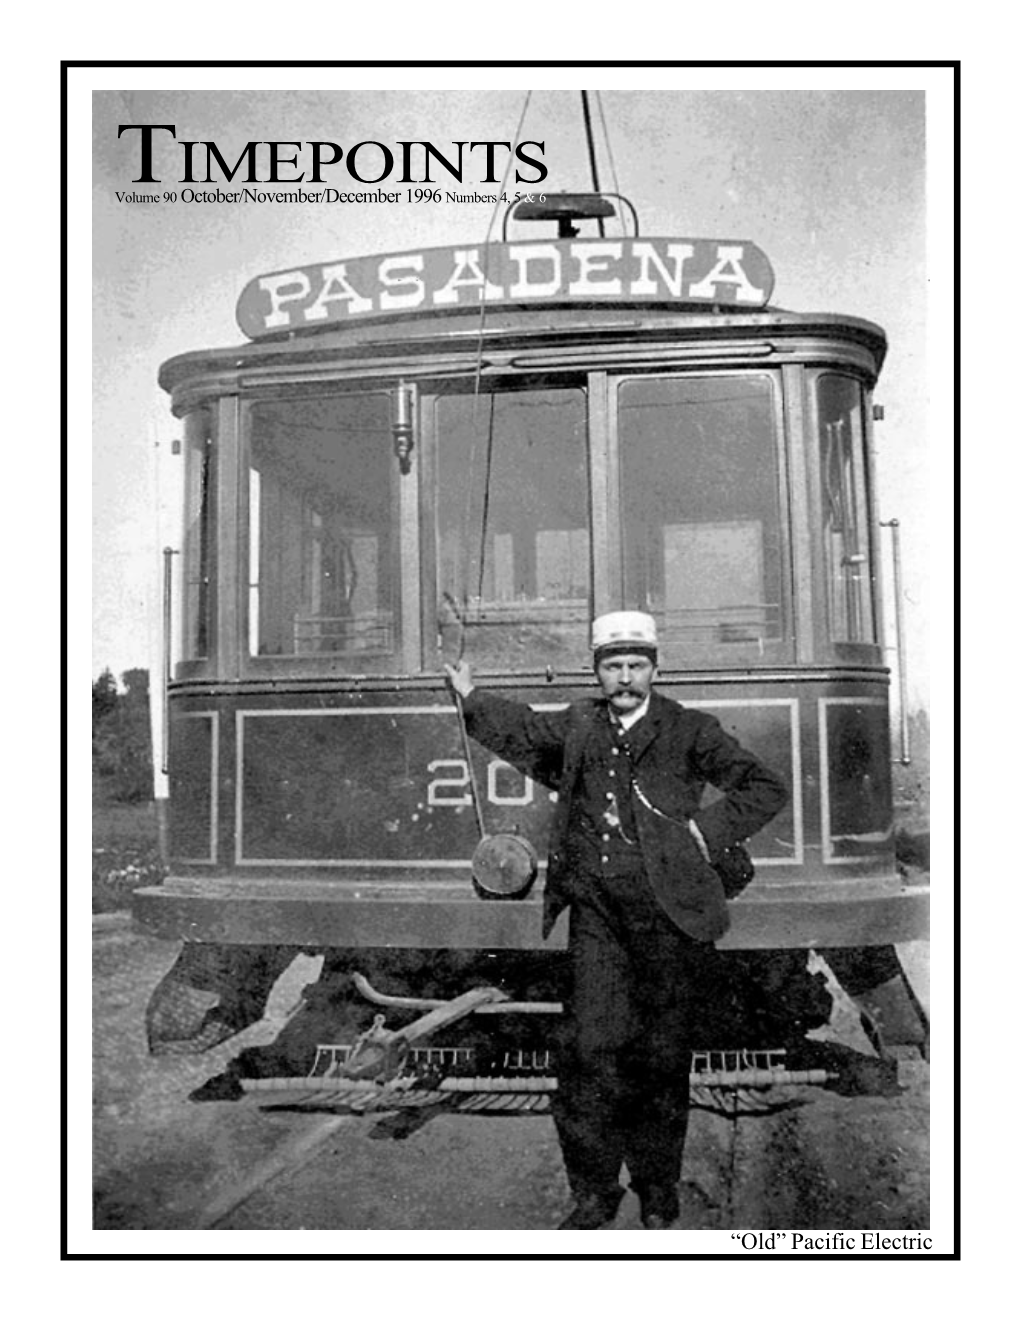 TIMEPOINTS Volume 90 October/November/December 1996 Numbers 4, 5 & 6